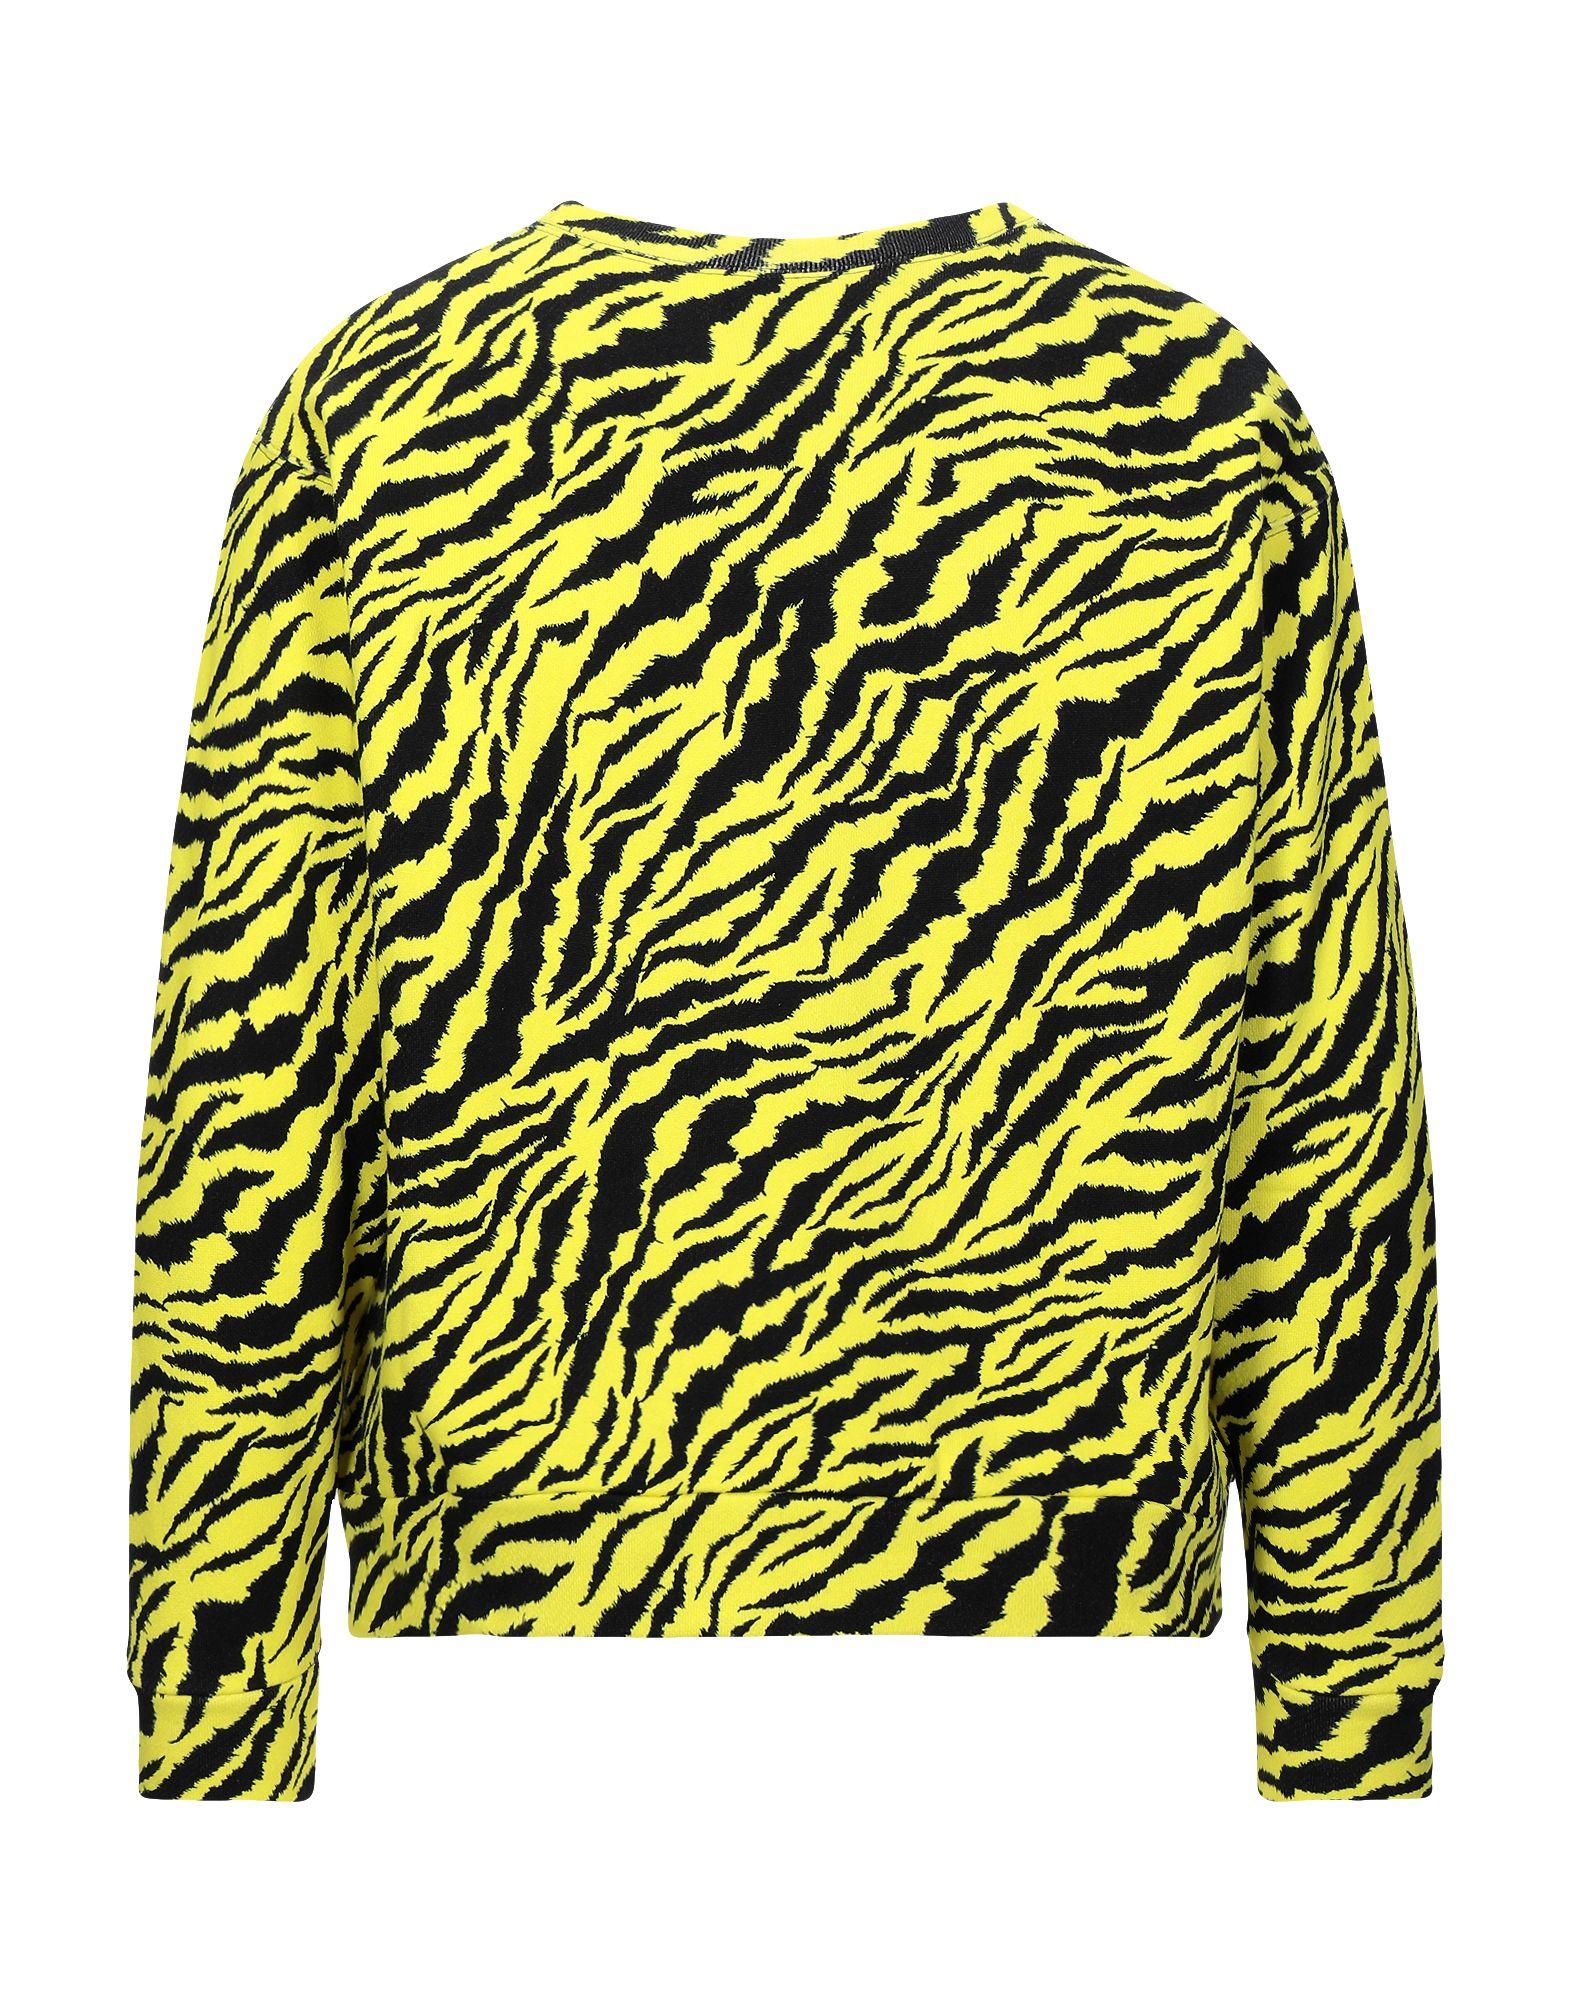 Gucci Sweatshirt in Yellow for Men - Lyst